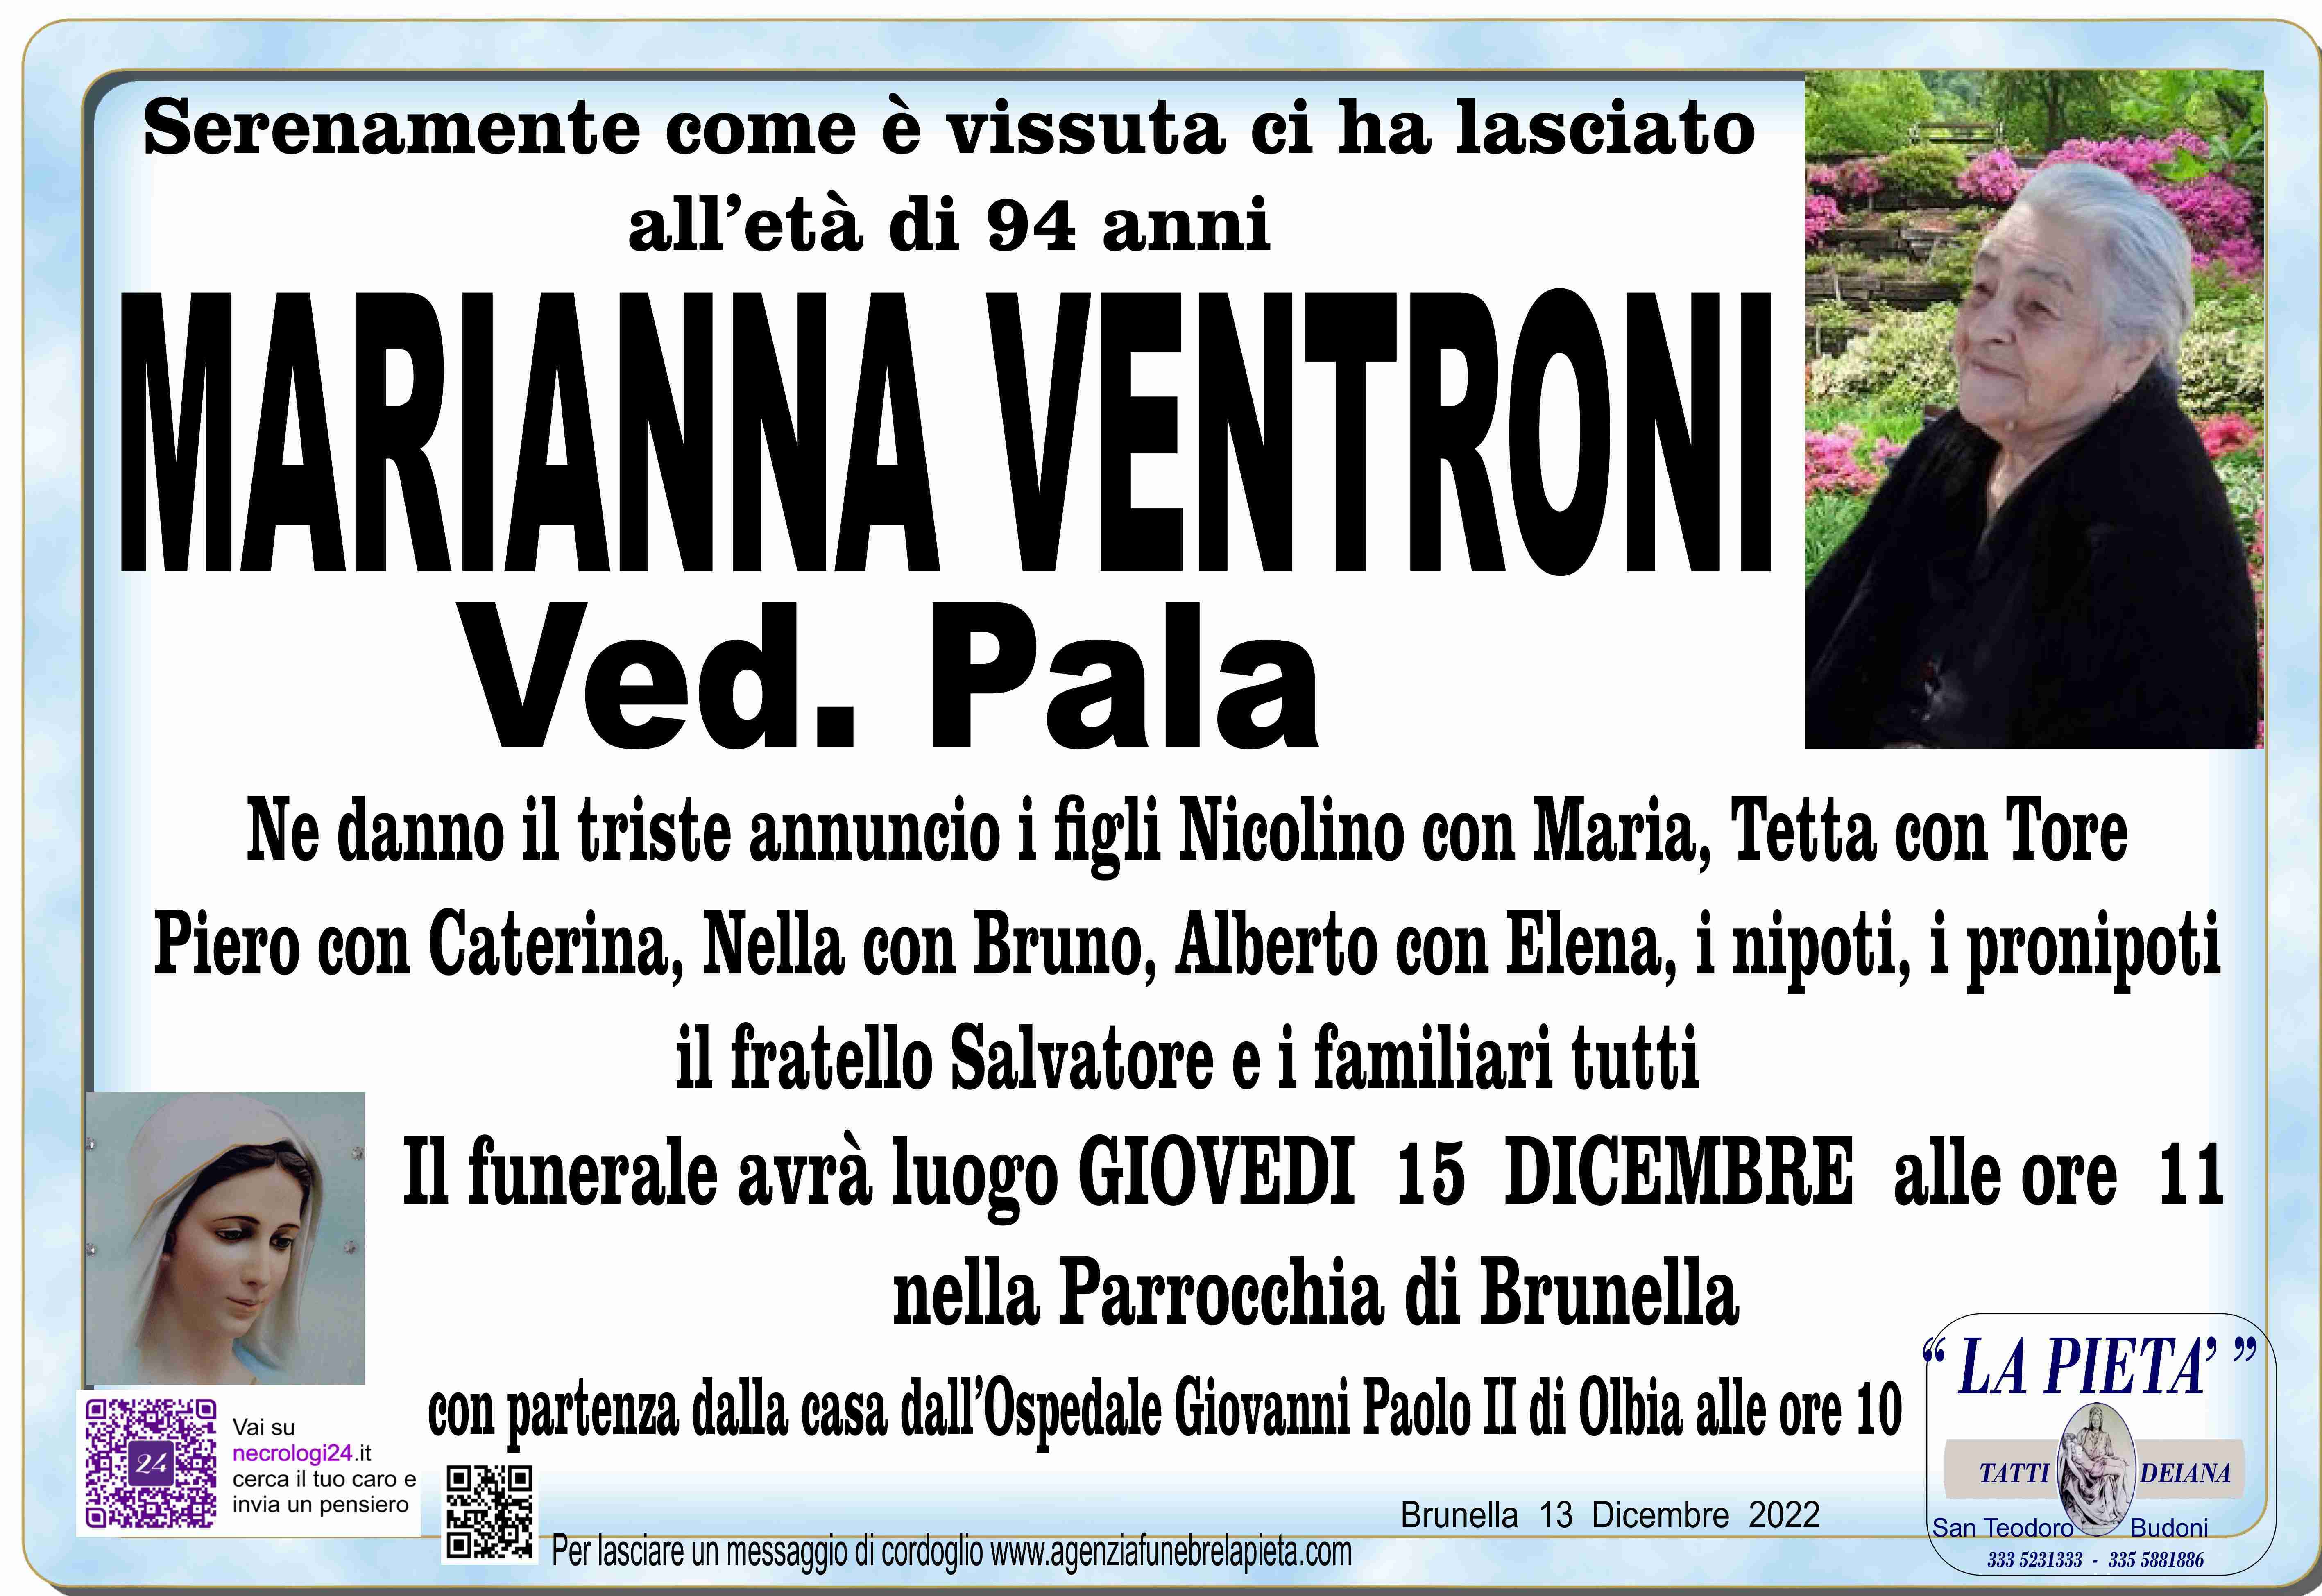 Marianna Ventroni